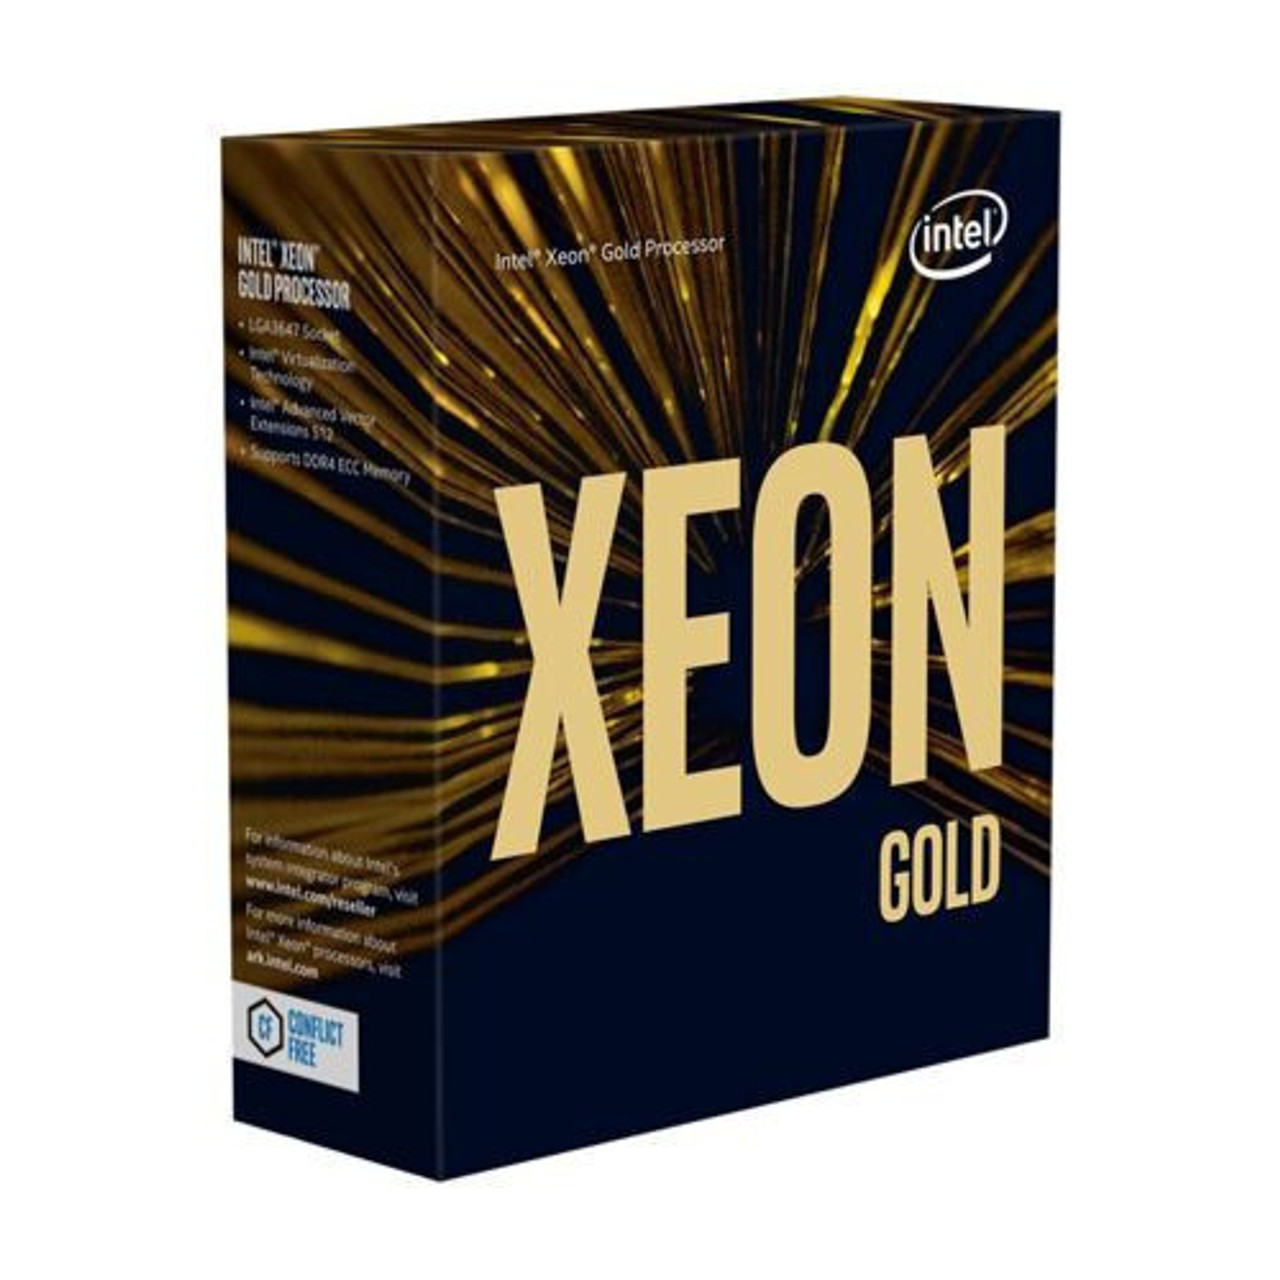 Intel Xeon Gold 6130 Processor - Smart Blue Computer